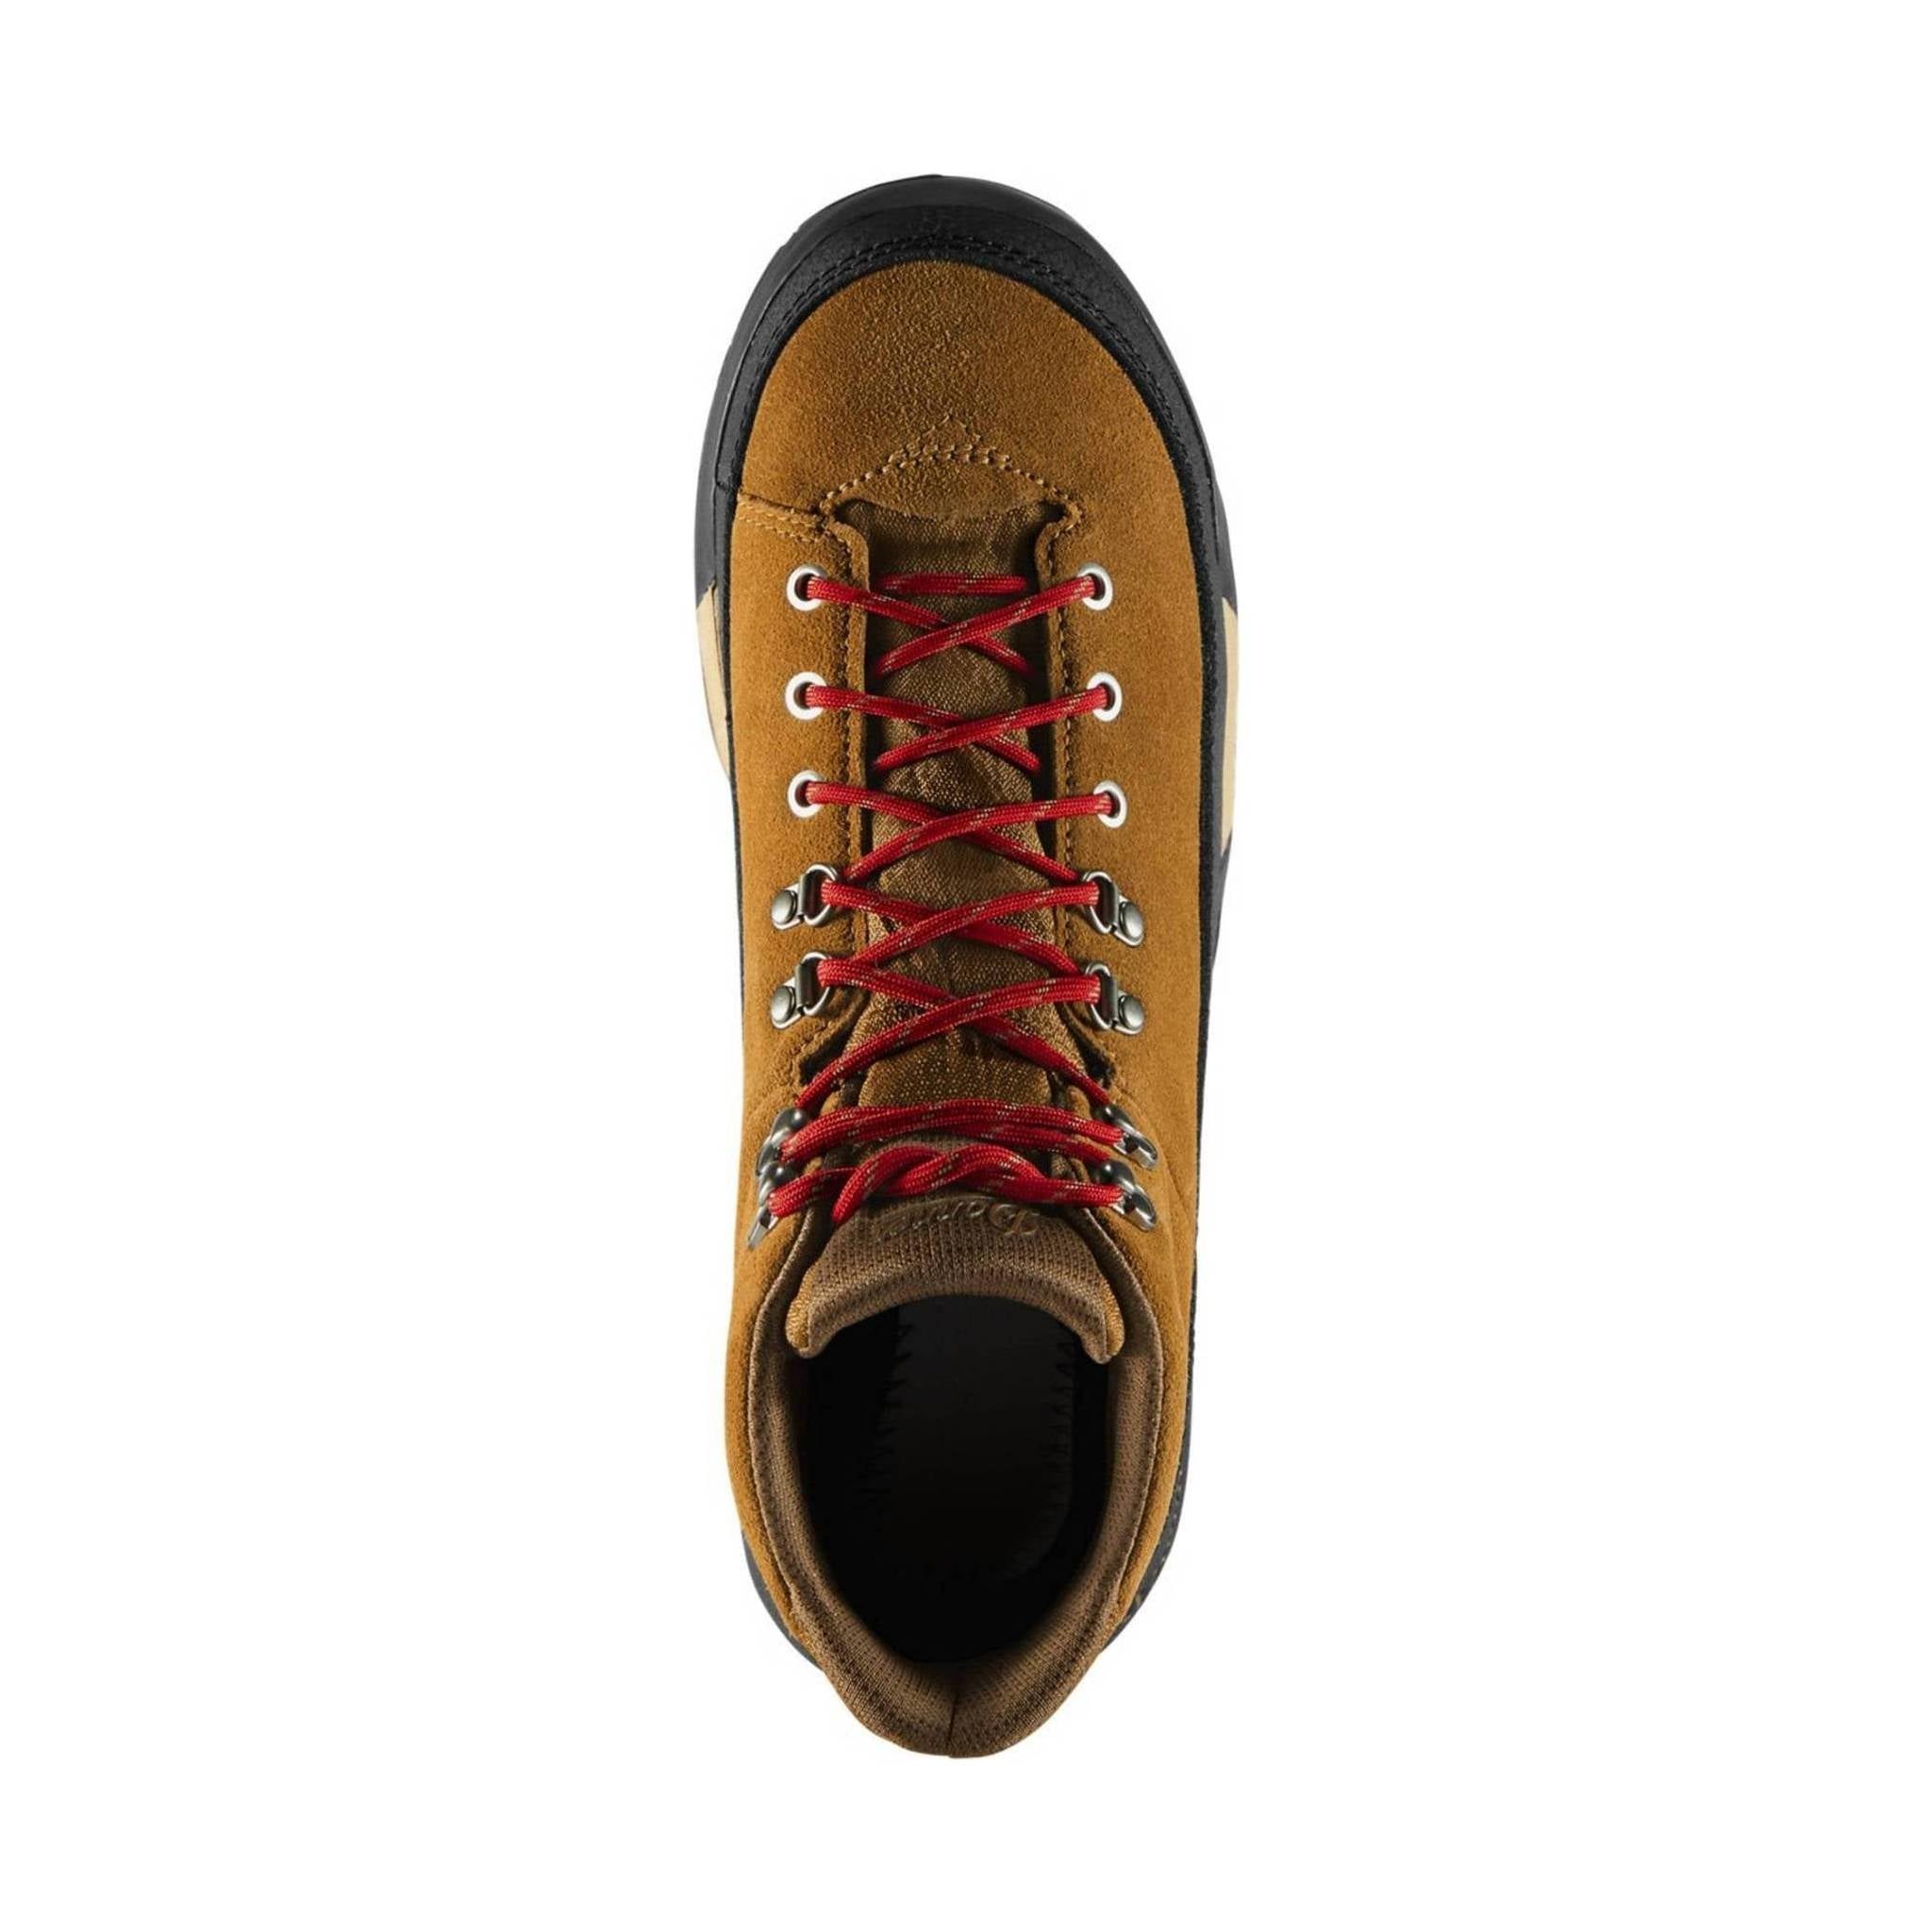 Danner Men's Panorama Mid 6 Inch Hiking Boot - Brown/Red